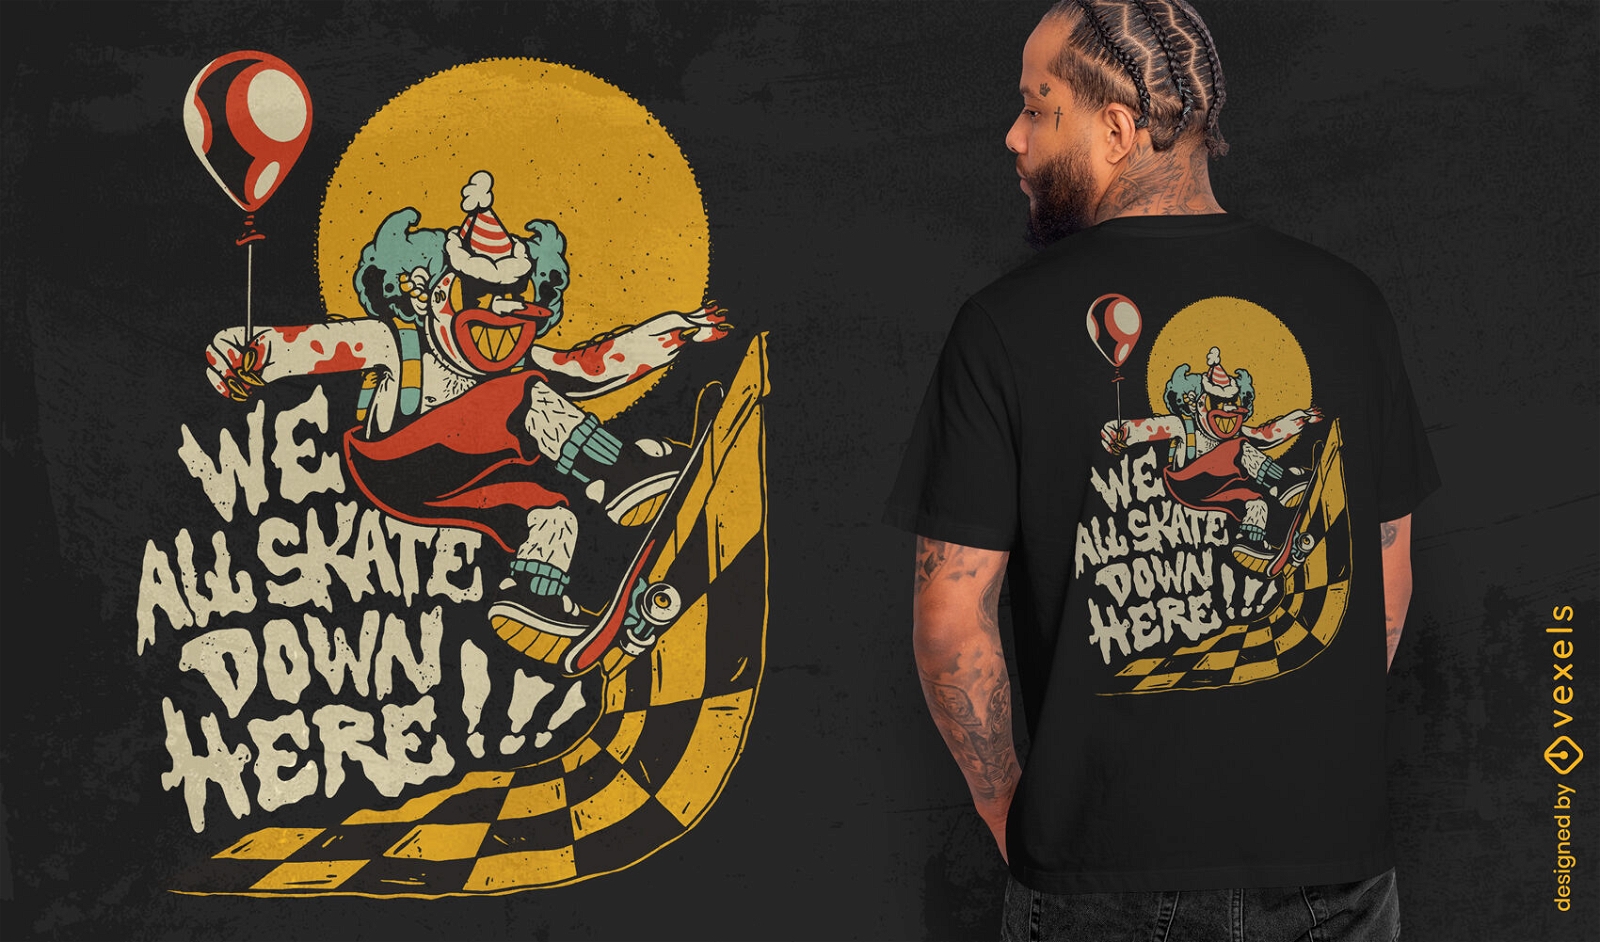 Skate clown t-shirt design